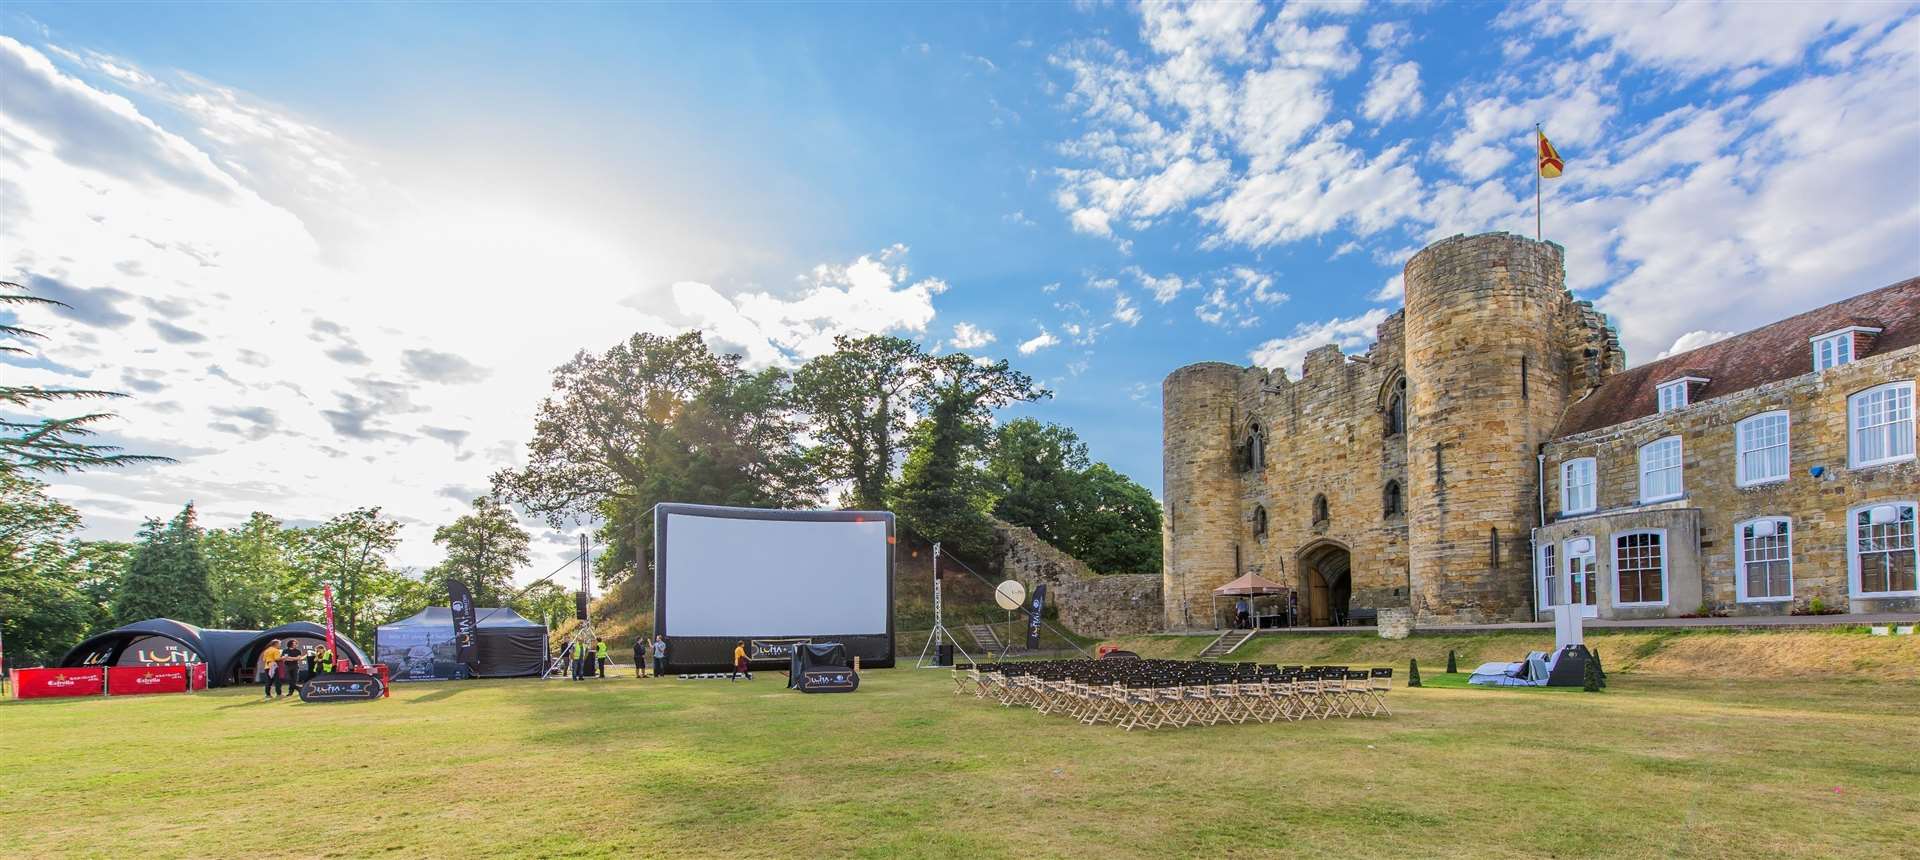 The Luna Cinema is coming to Tonbridge Castle